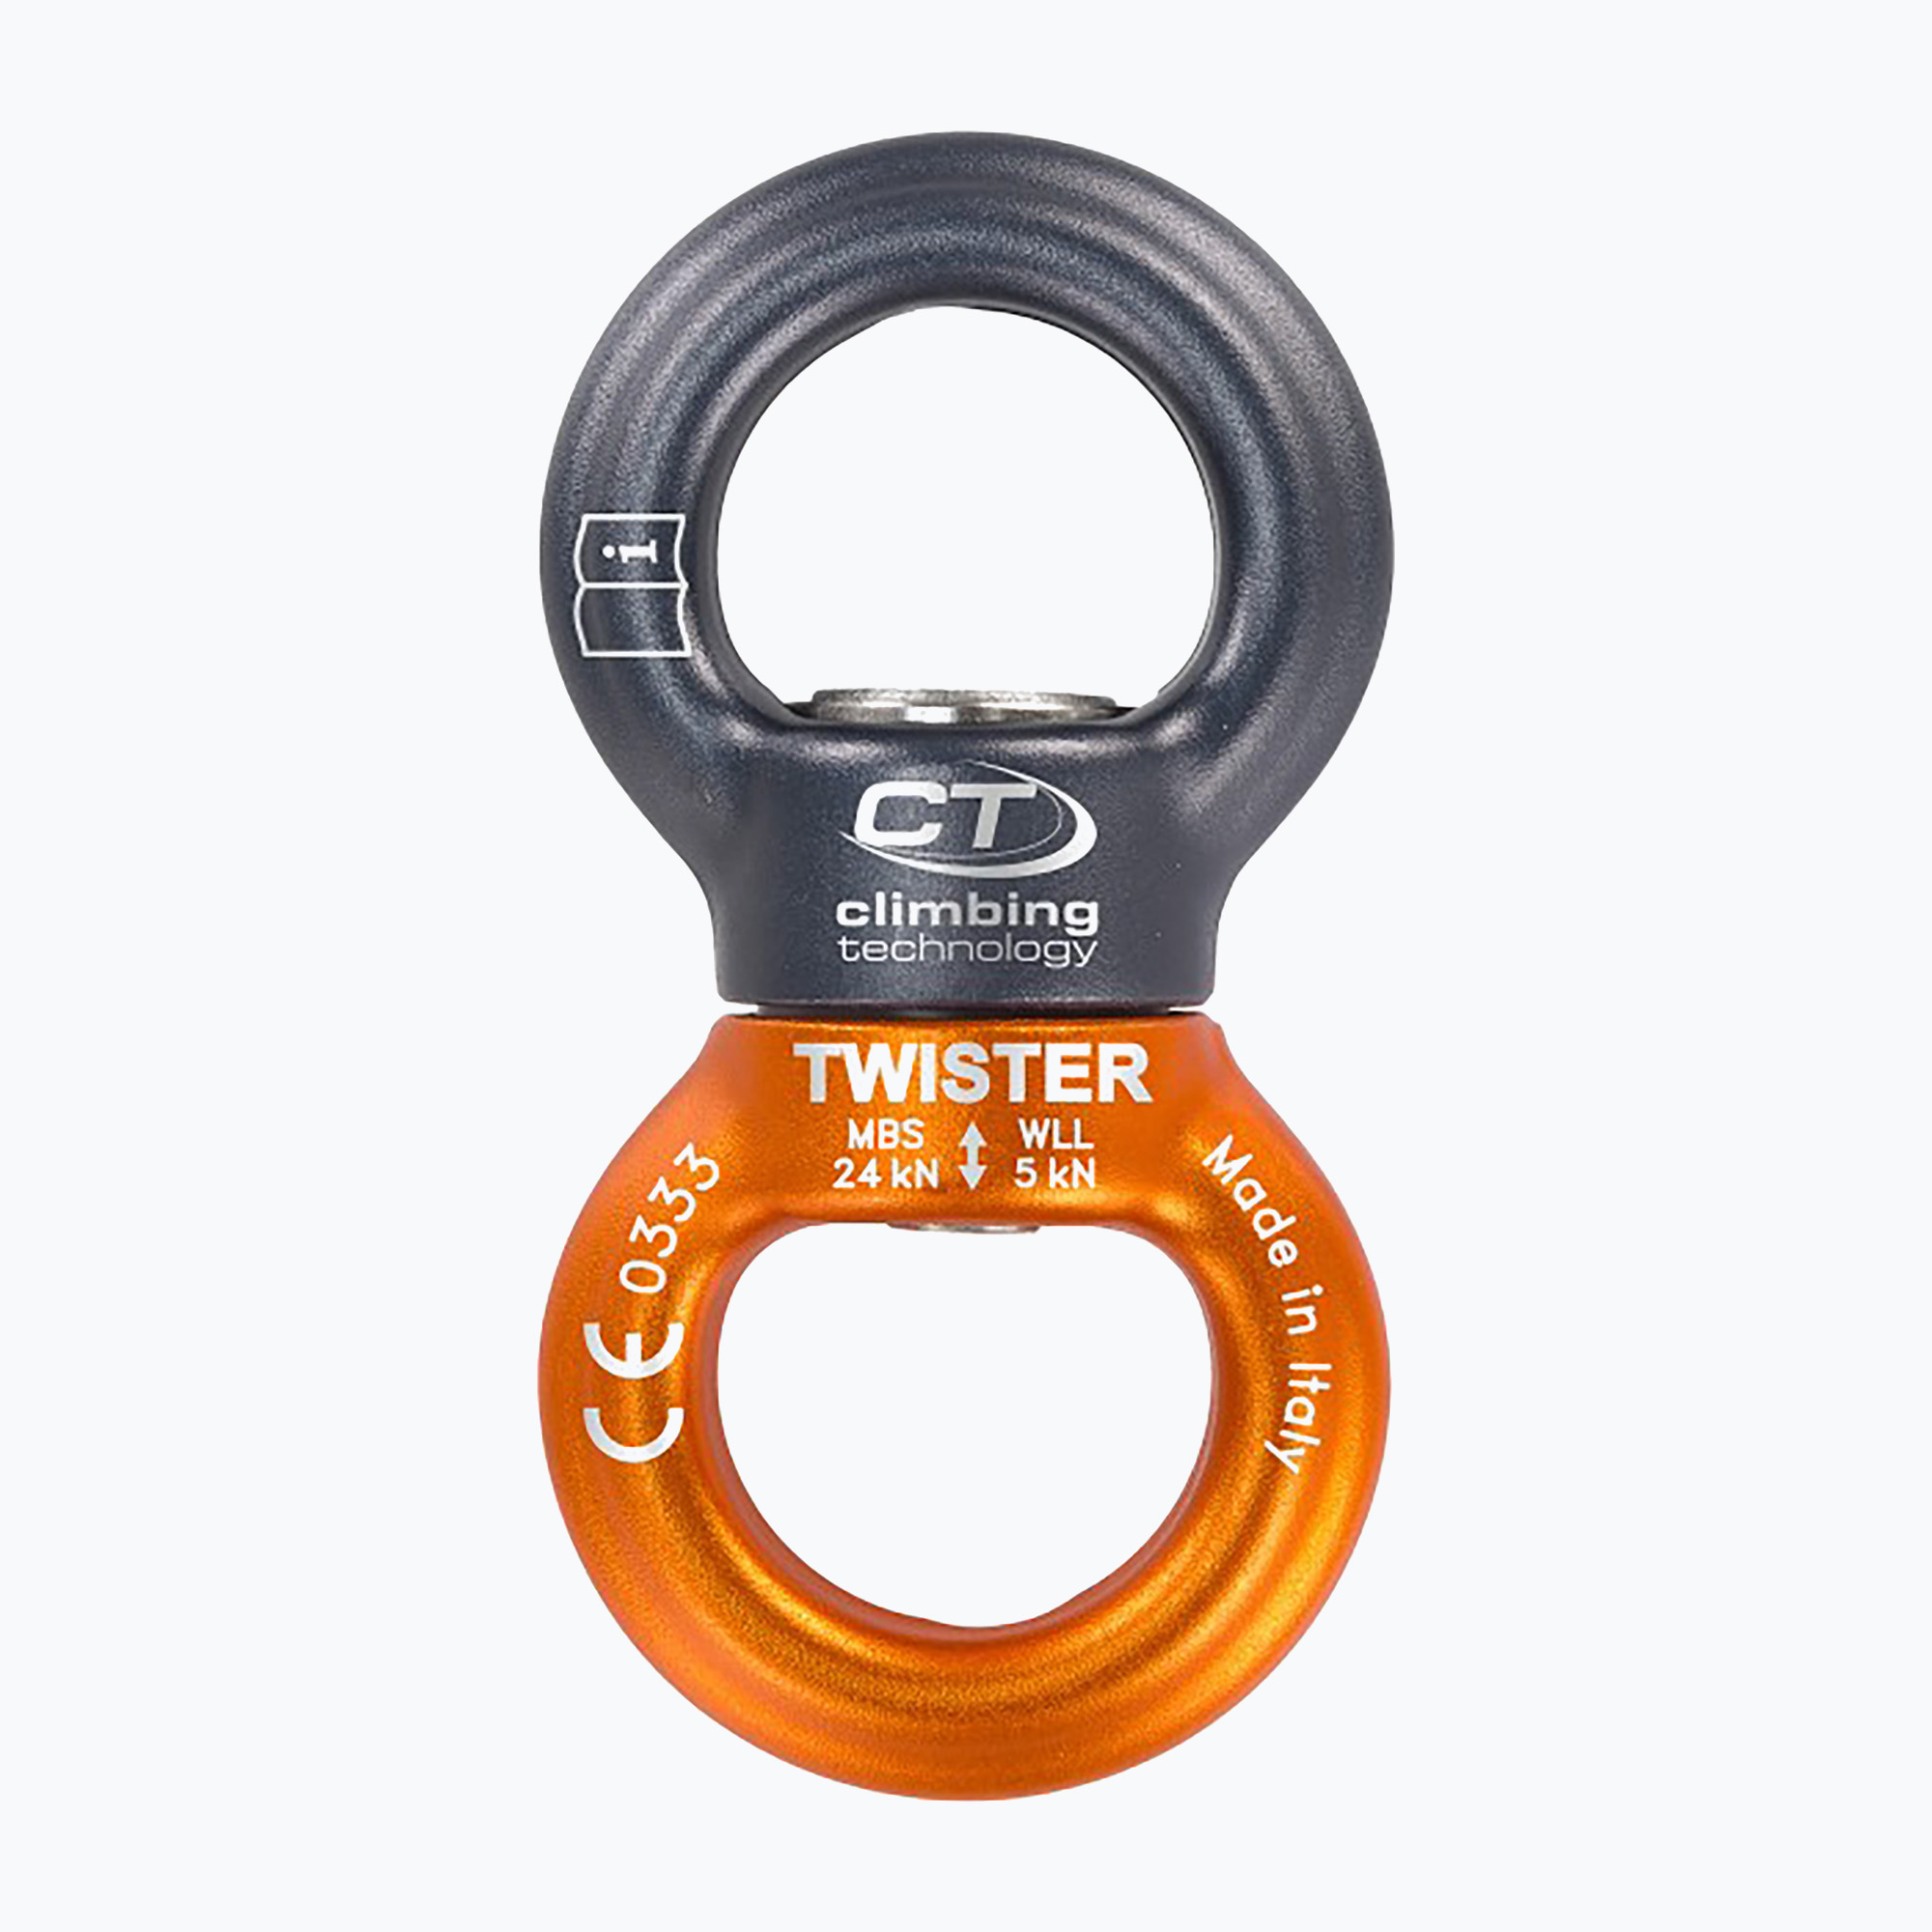 Climbing Technology Twister сив/оранжев въртящ се елемент